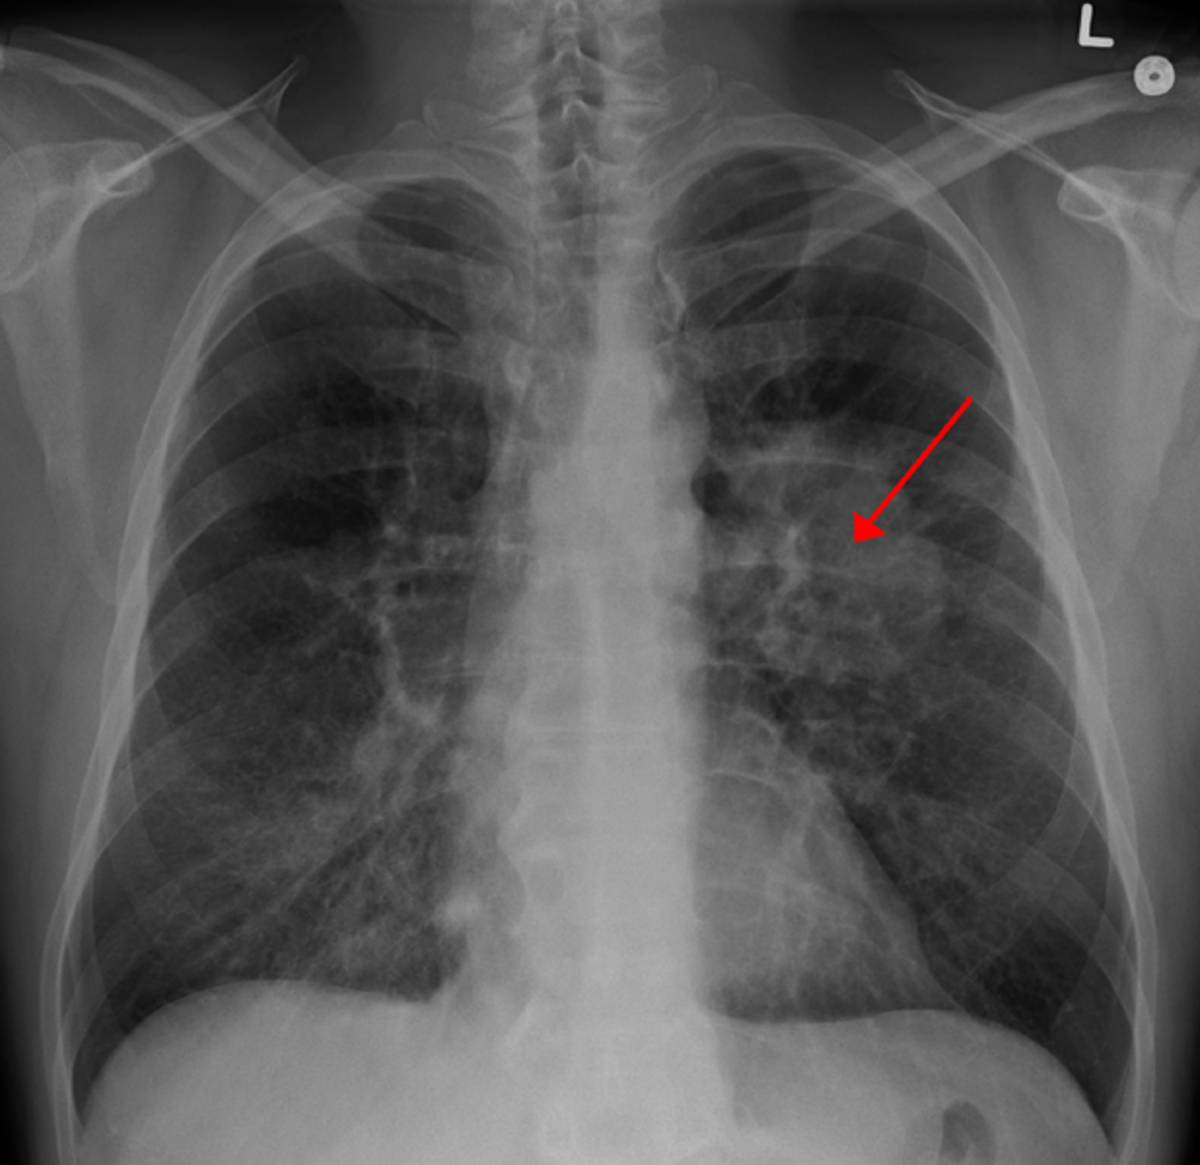 Lung cancer found via an x-ray